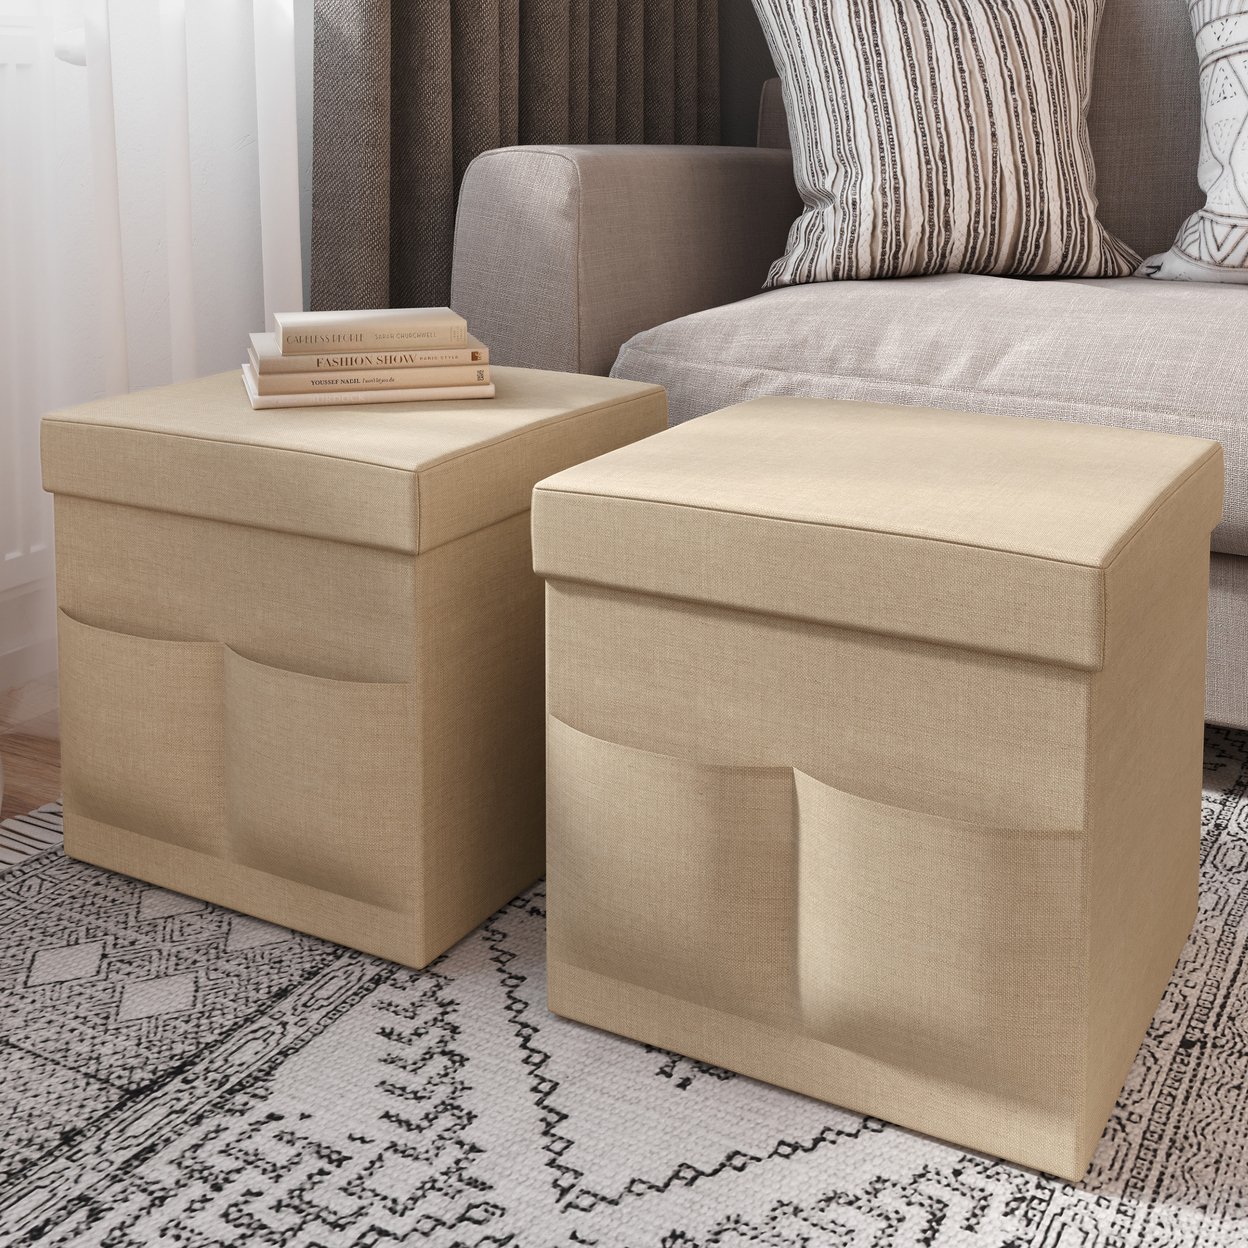 Foldable Storage Cube Ottomans With Pockets Livingroom Dorm Multipurpose